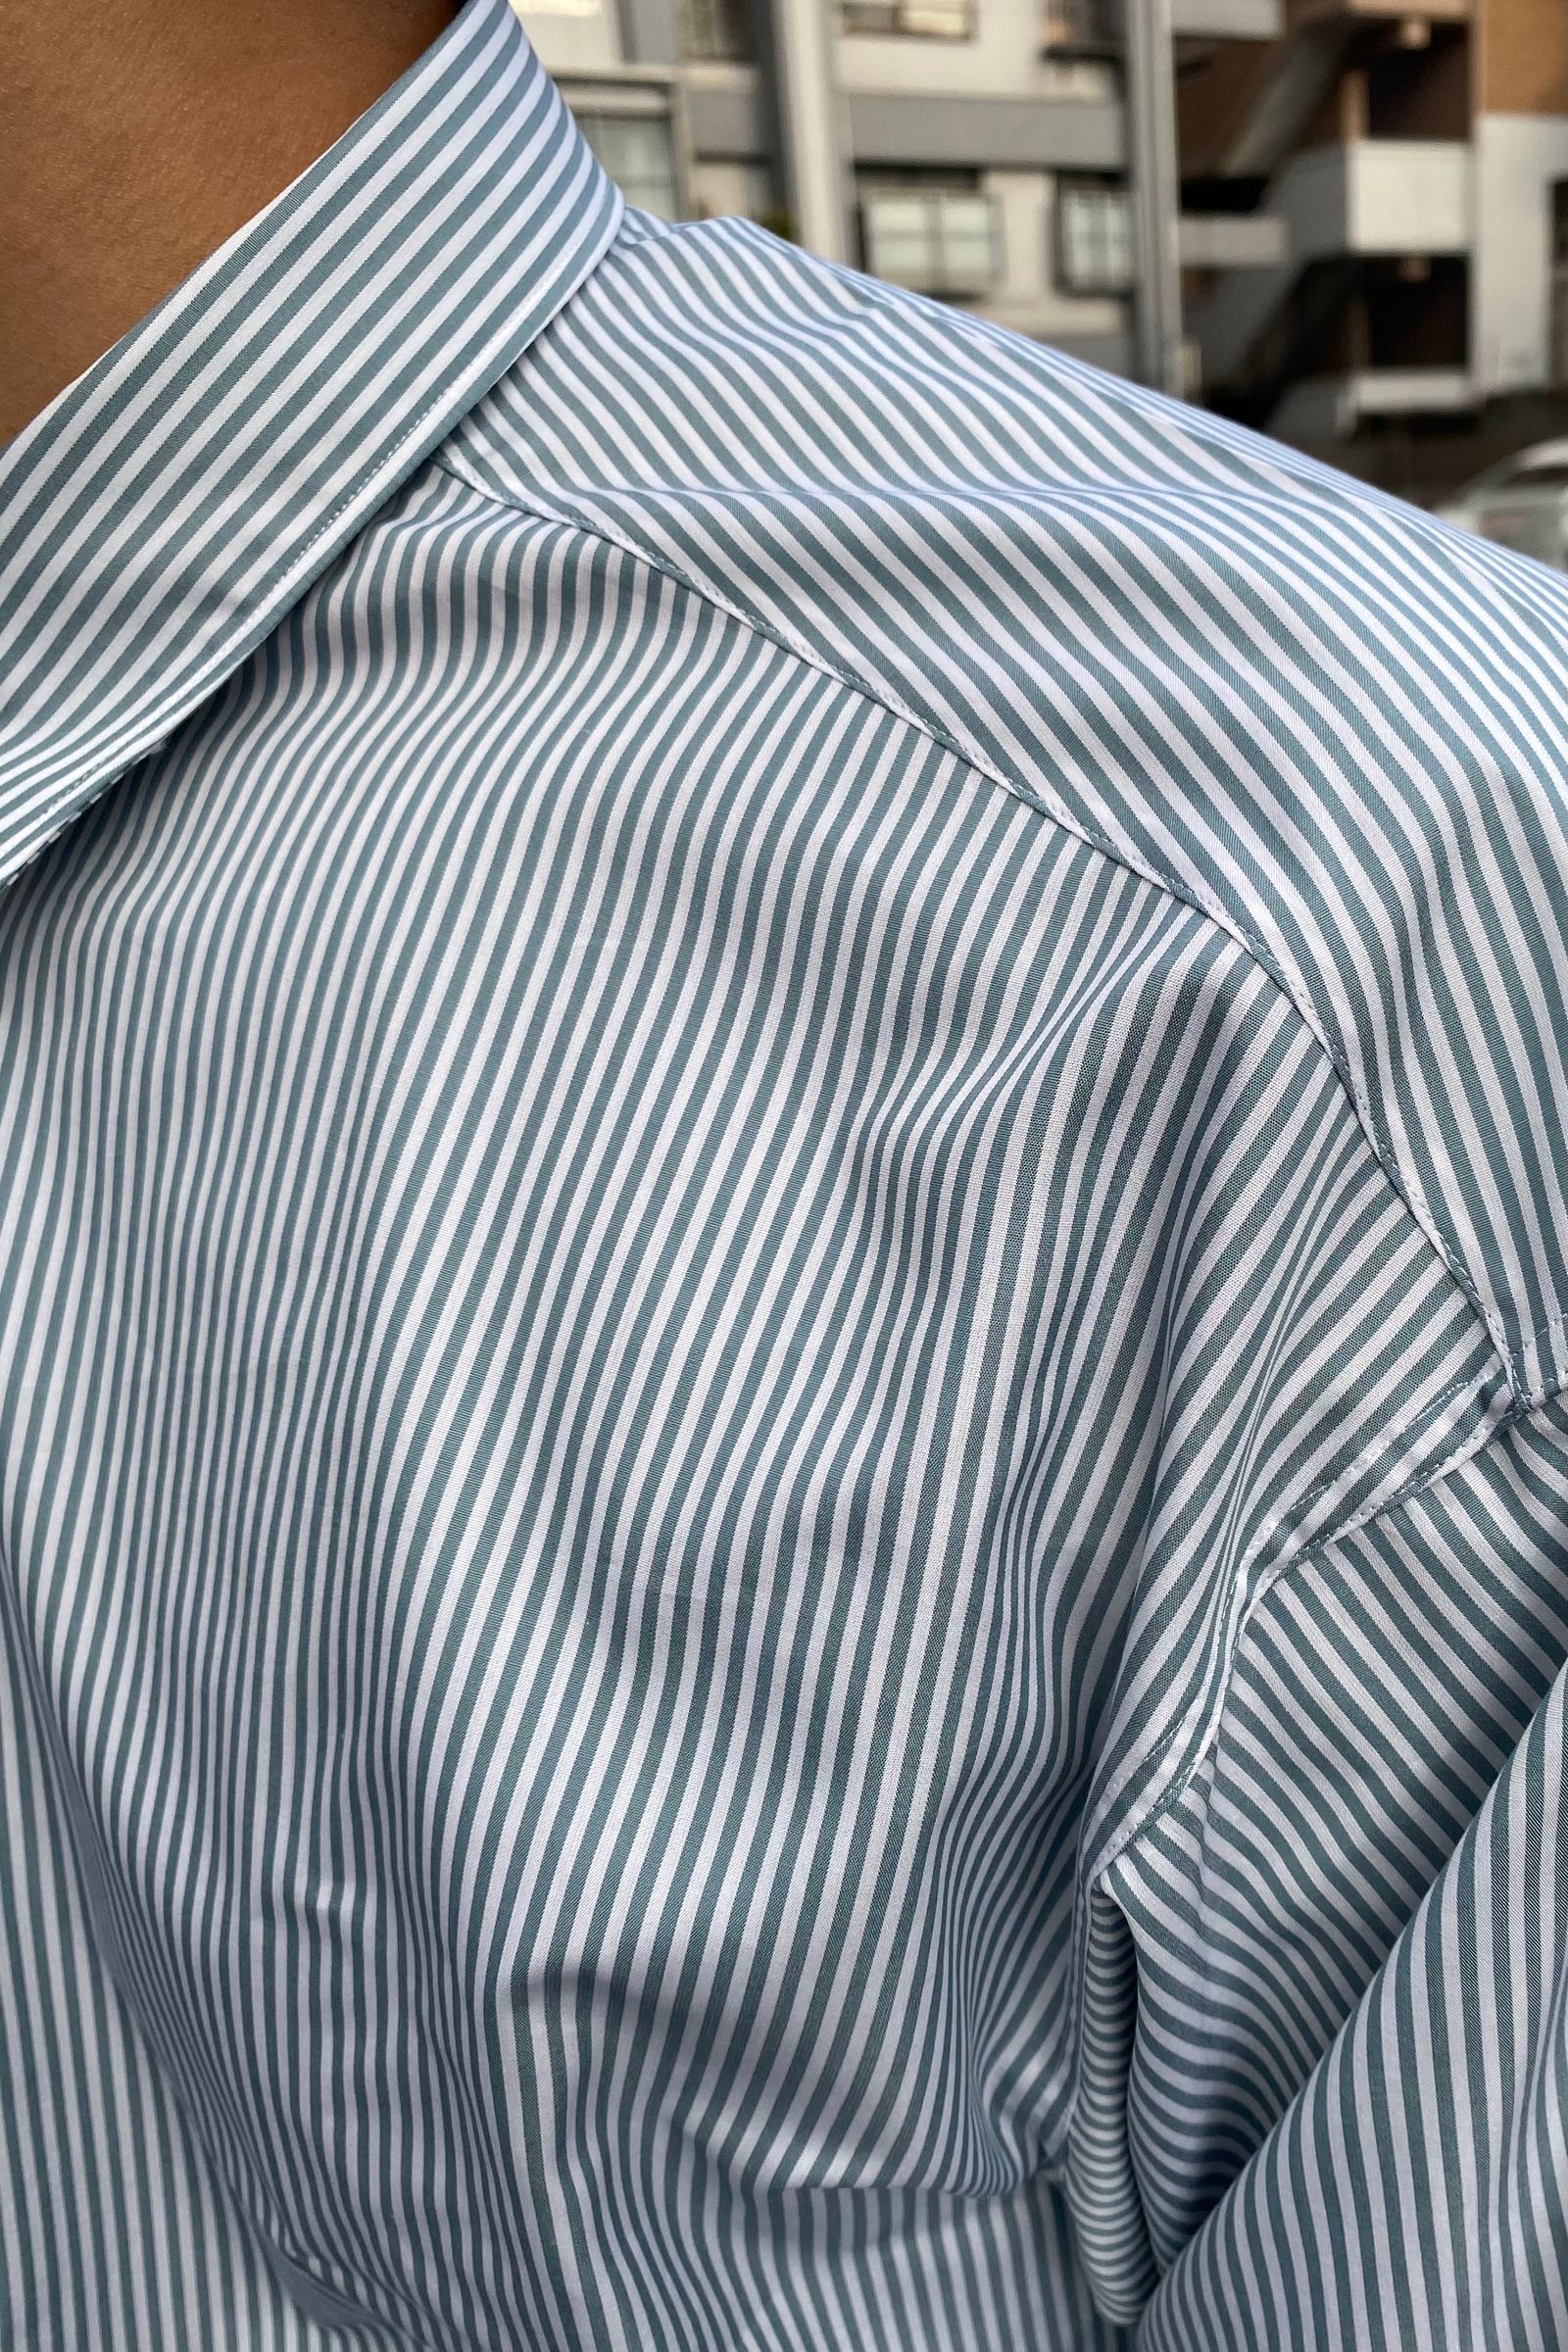 A.PRESSE   pullover grandpa shirts  stripe  ss 日発売